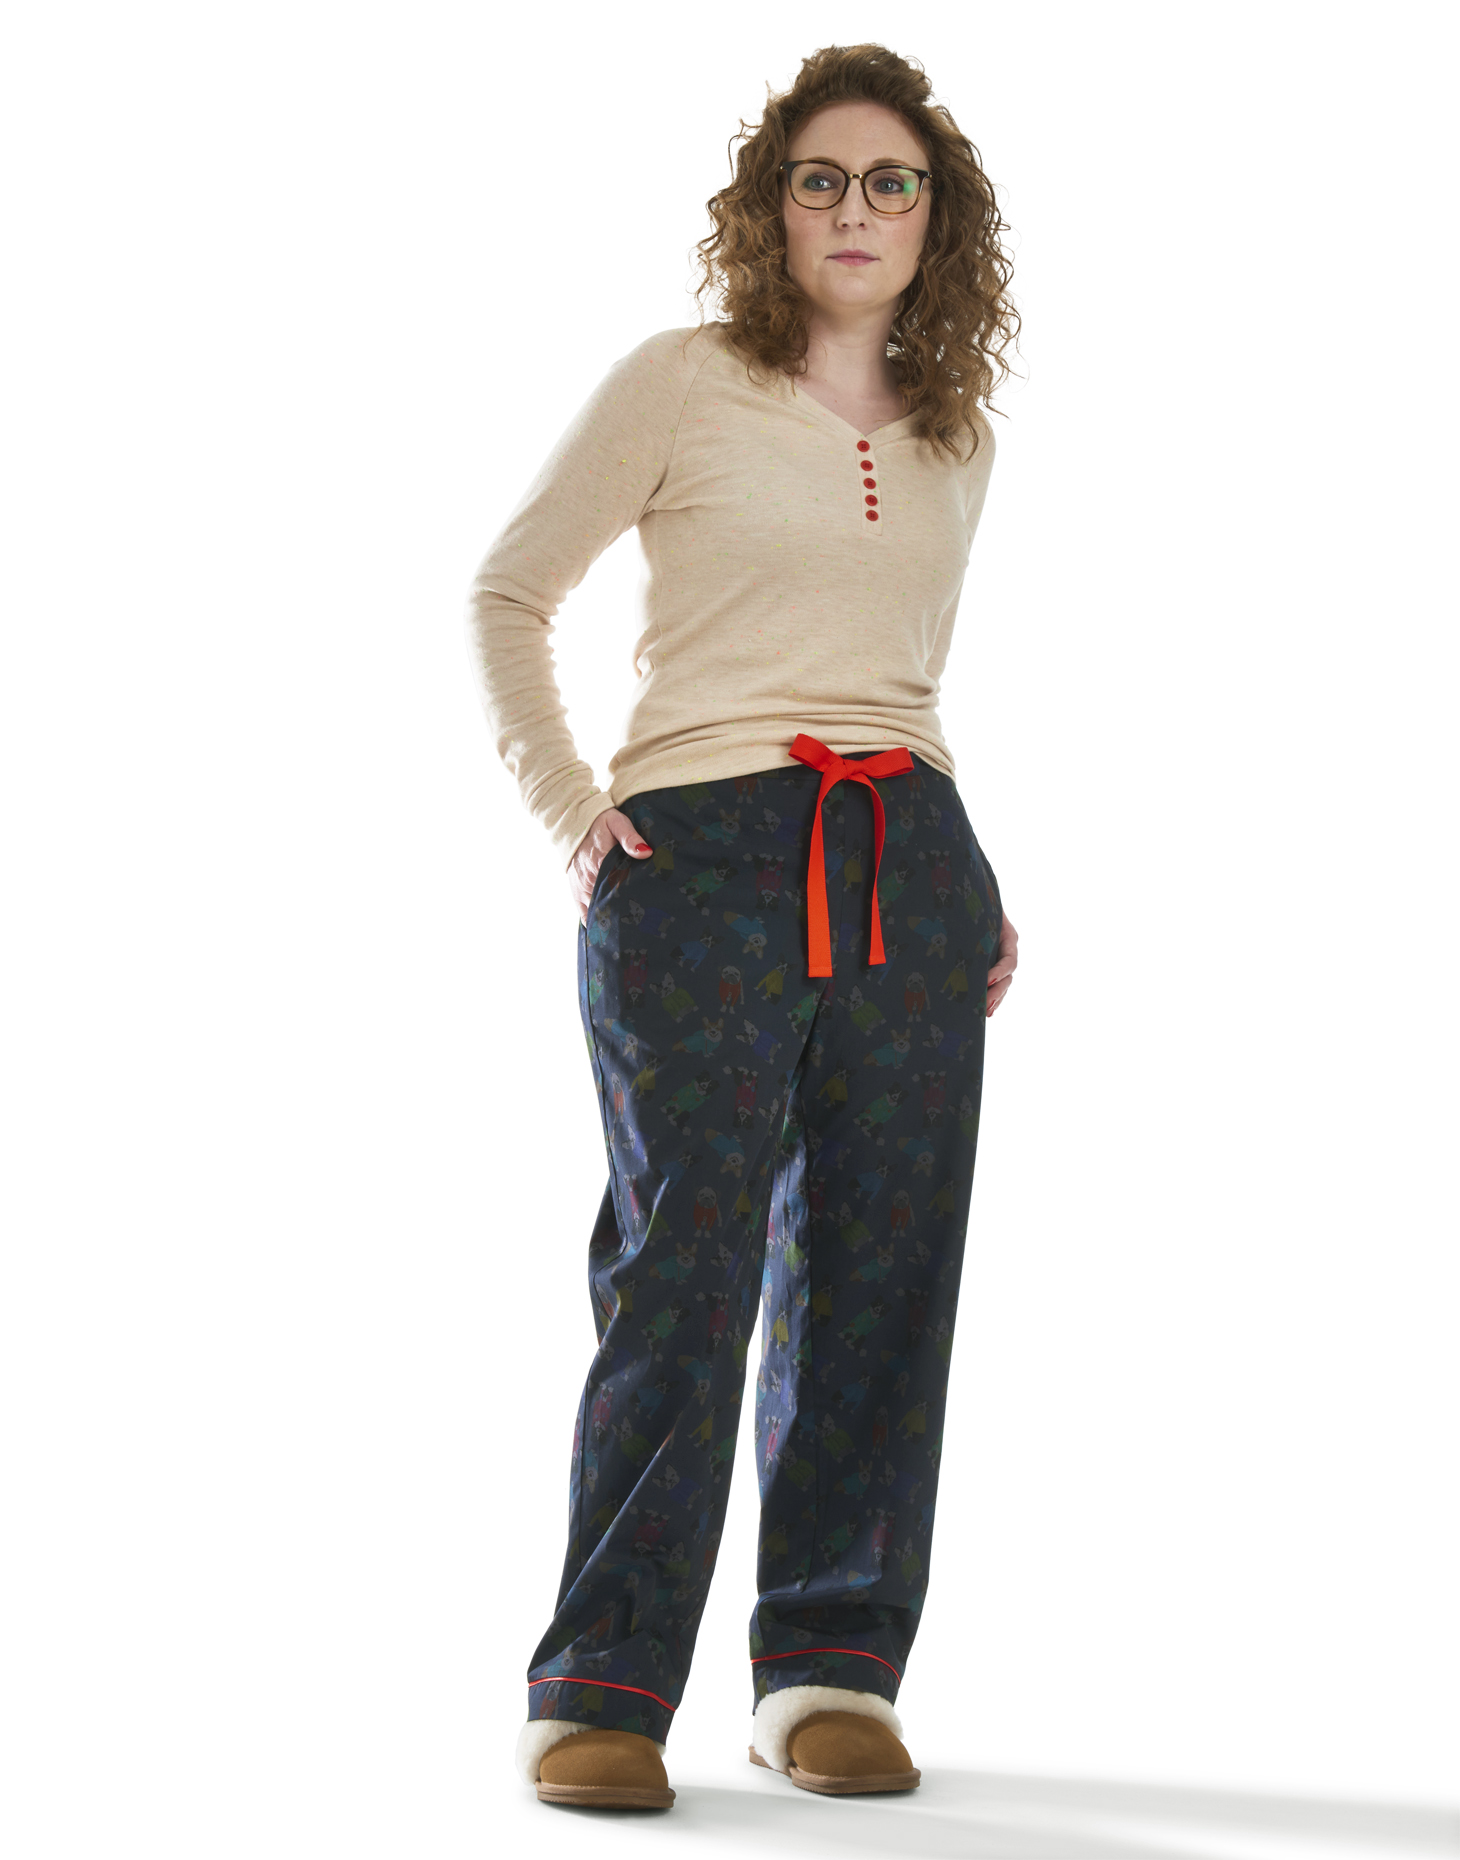 Tessie Clothing Confetti Oat Long Sleeve Top & Rascal Dog Print Pyjama Trousers